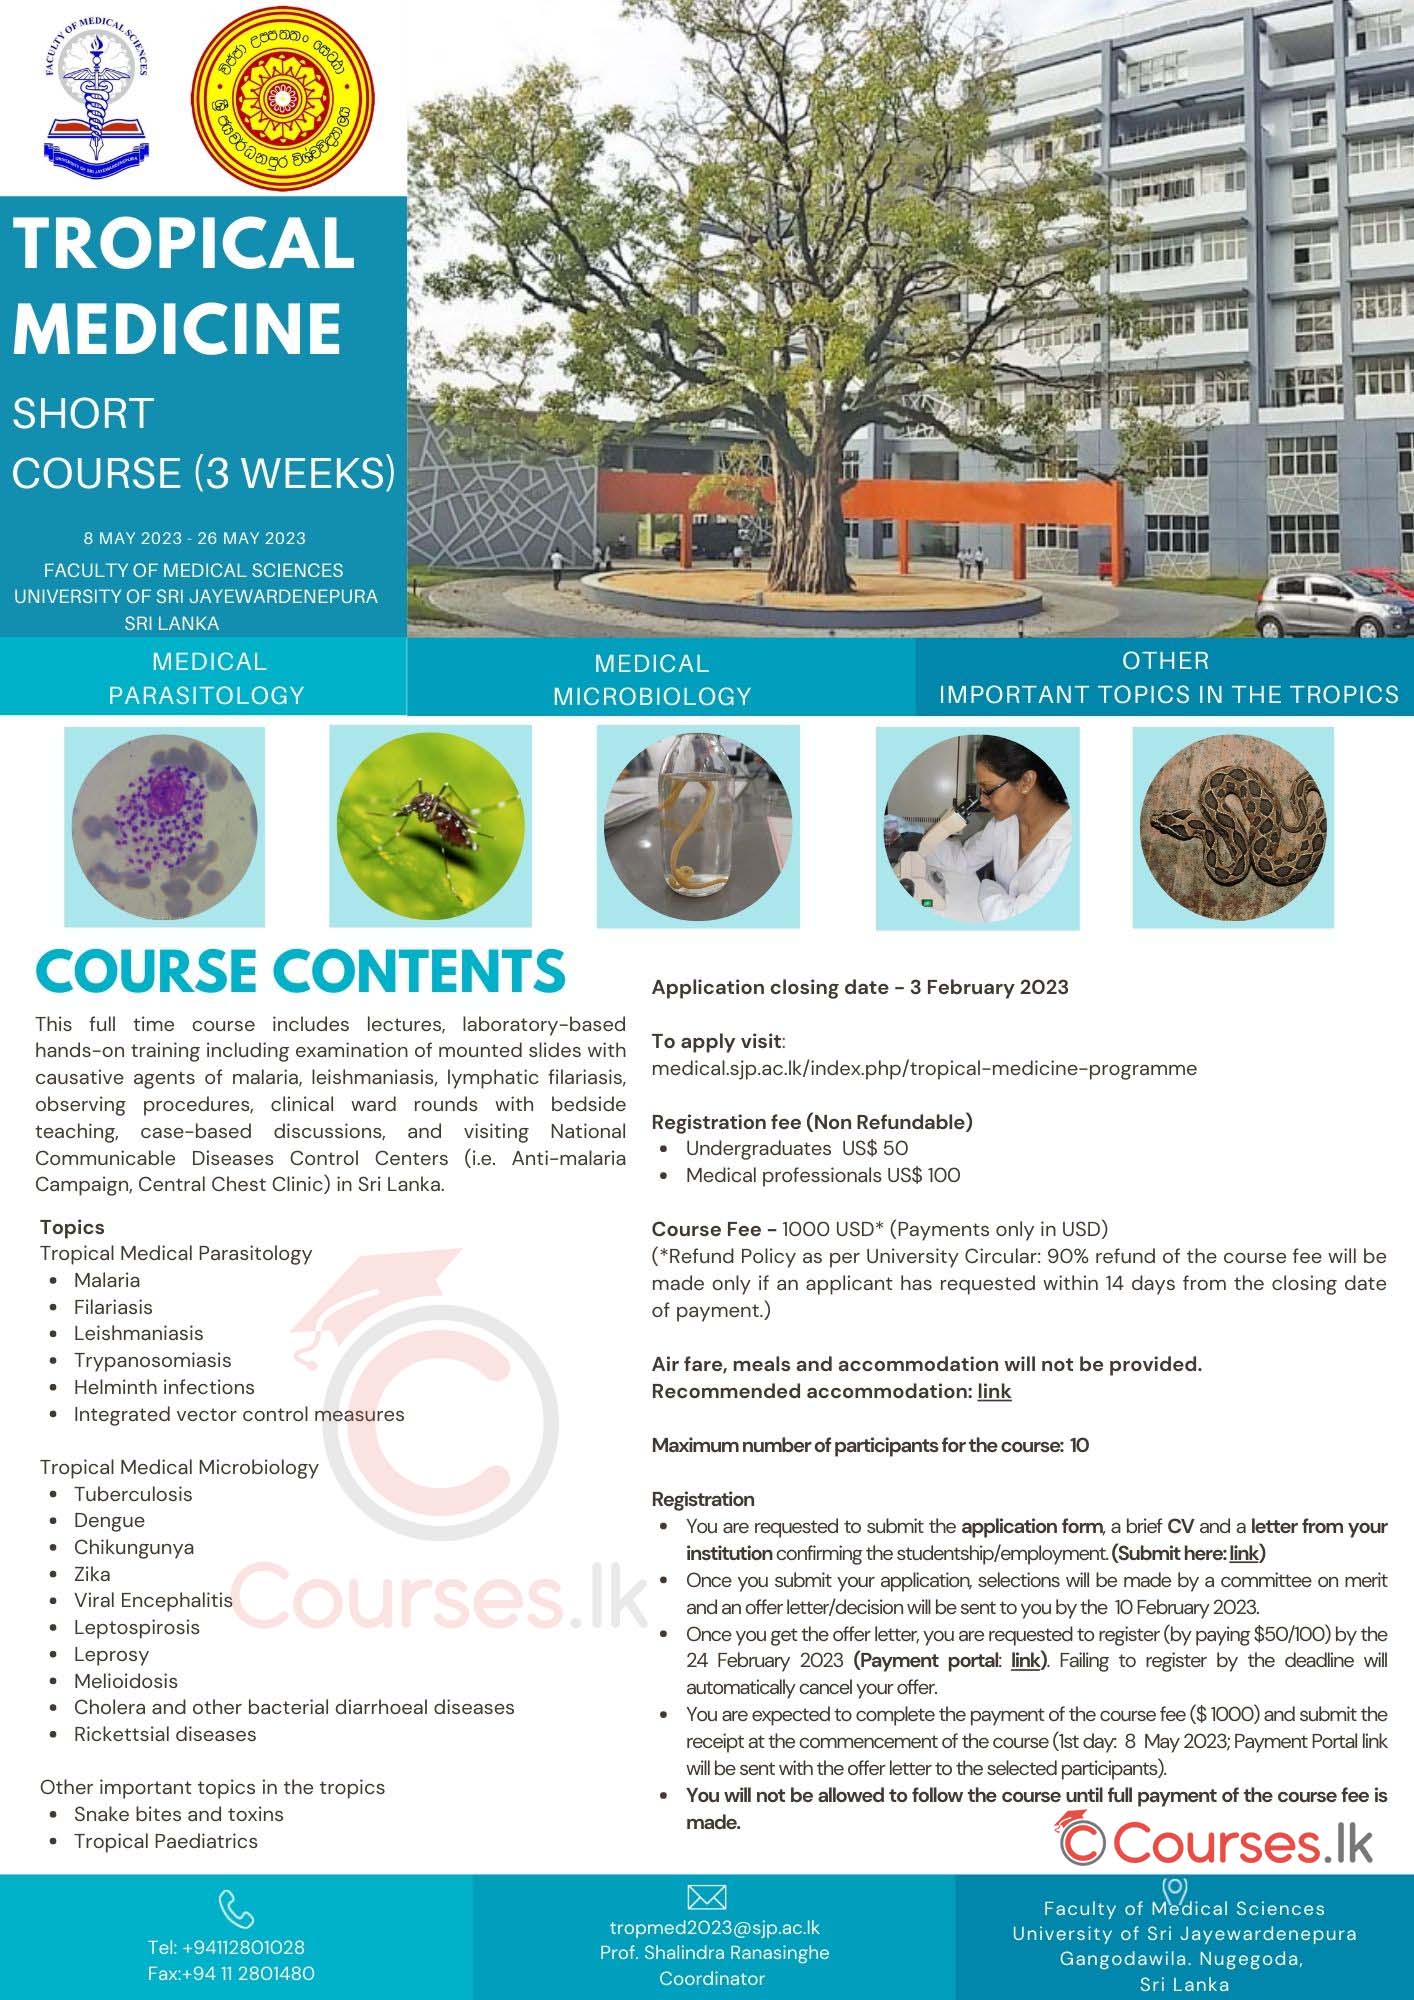 Tropical Medicine (Short Course) 2023 - University of Sri Jayewardenepura